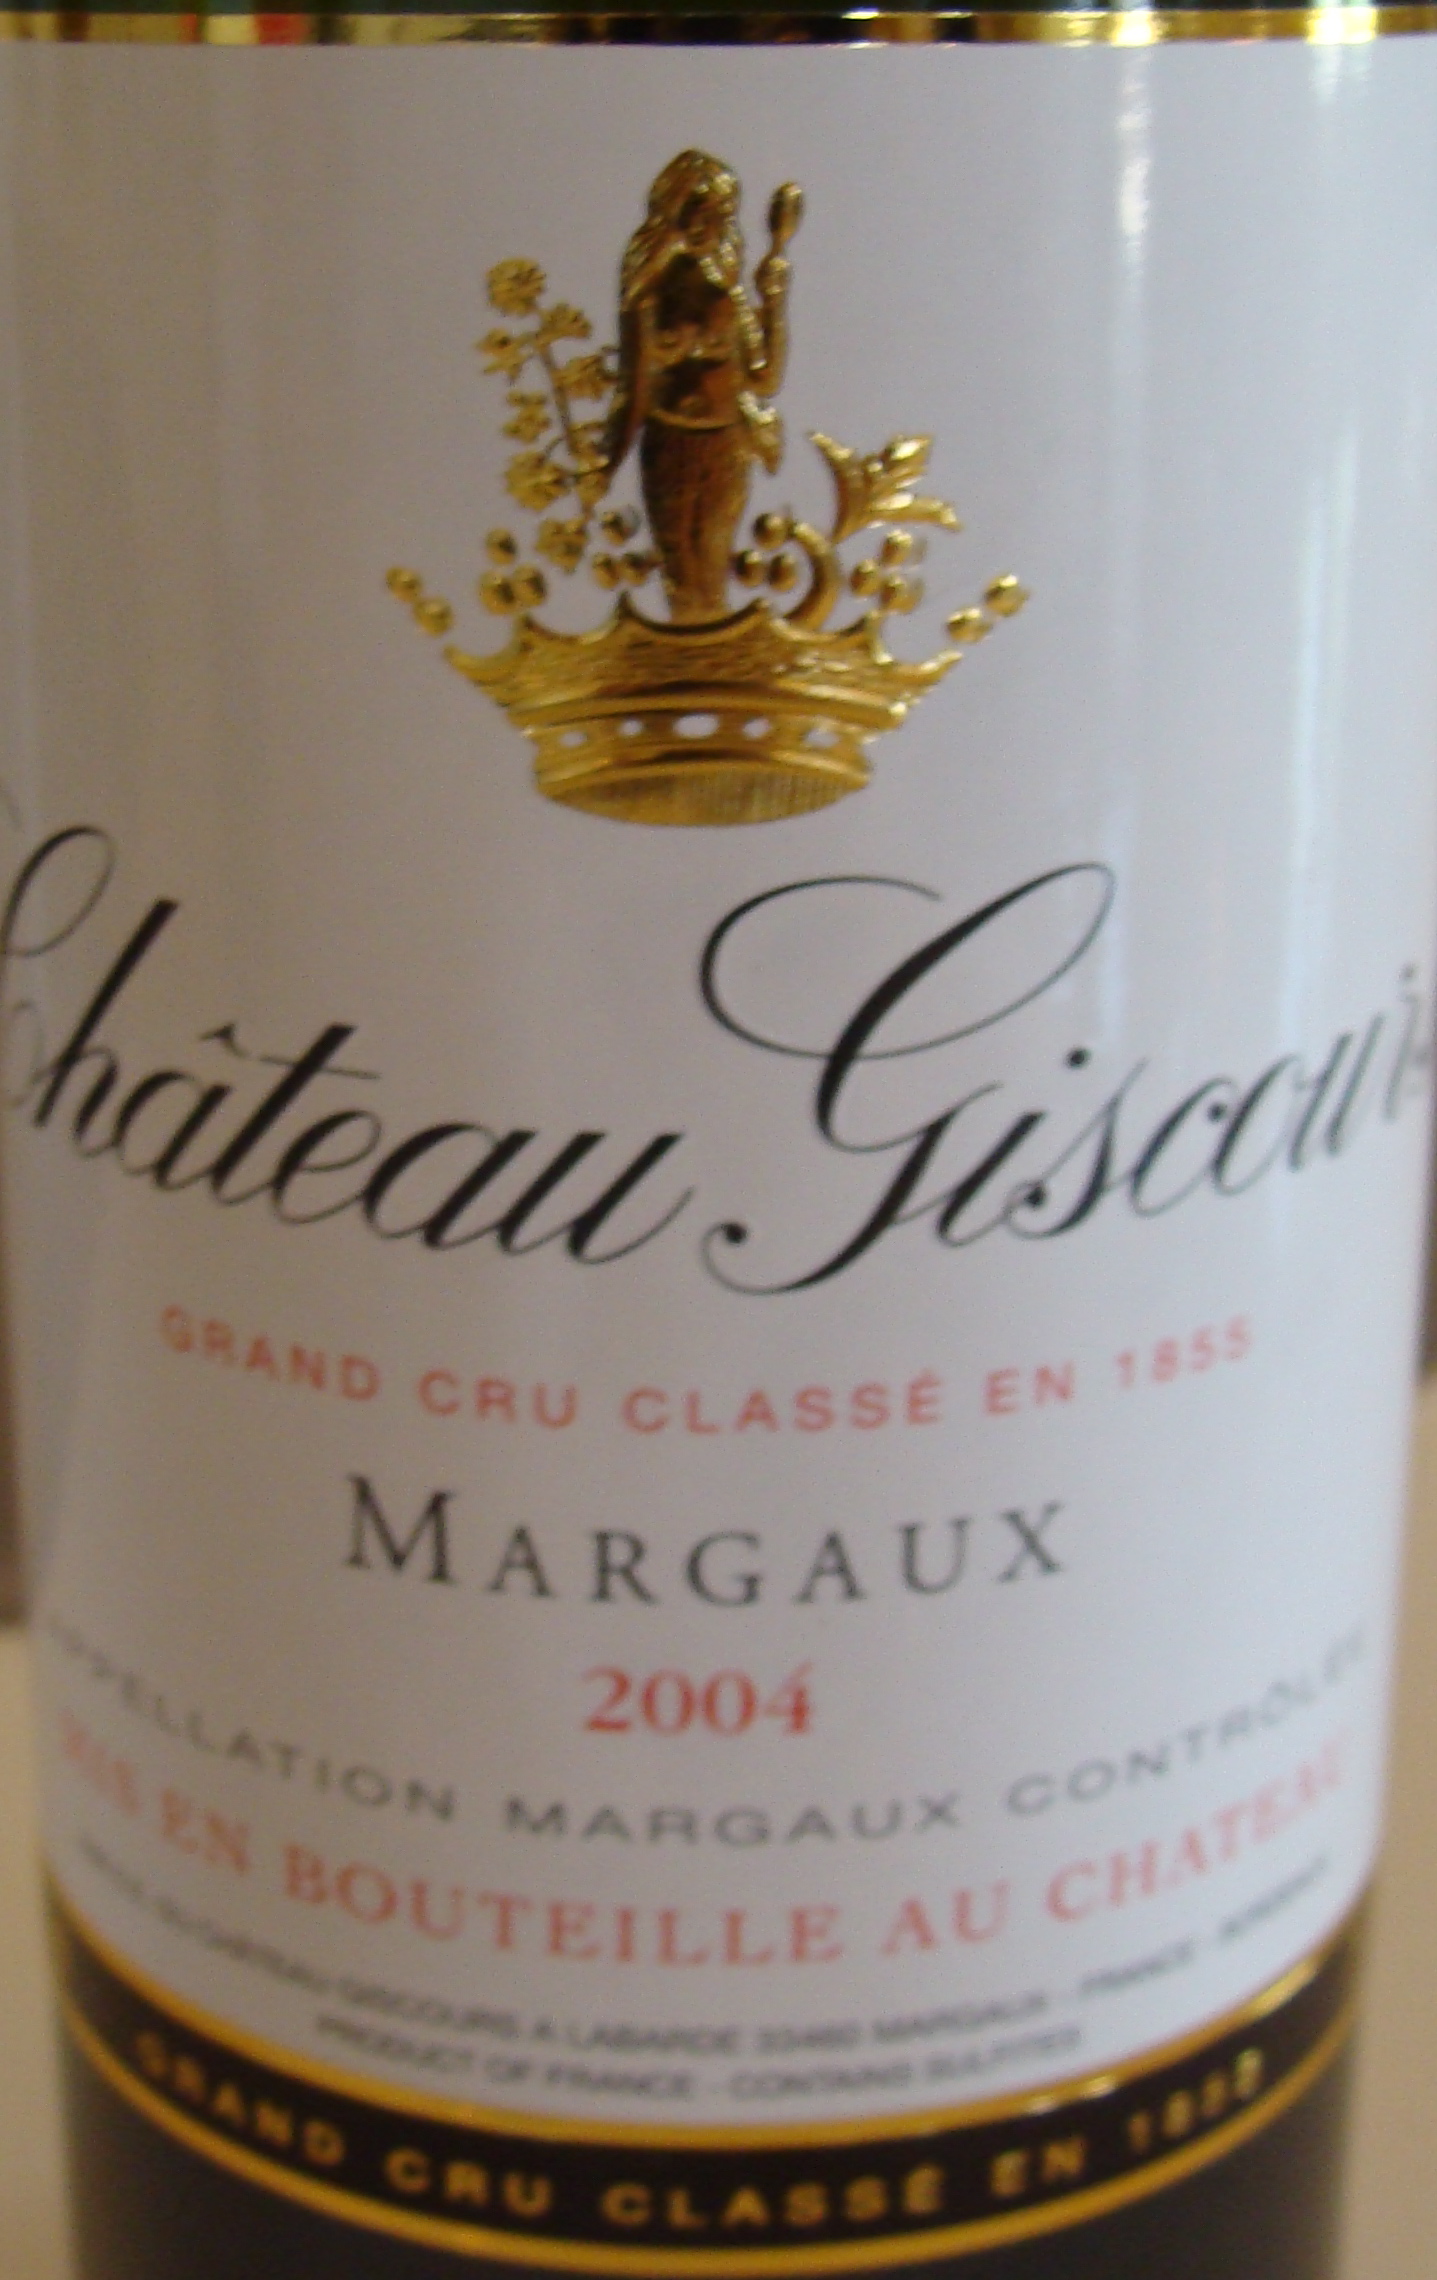 AOC wine Chateau Giscourse - Margaux